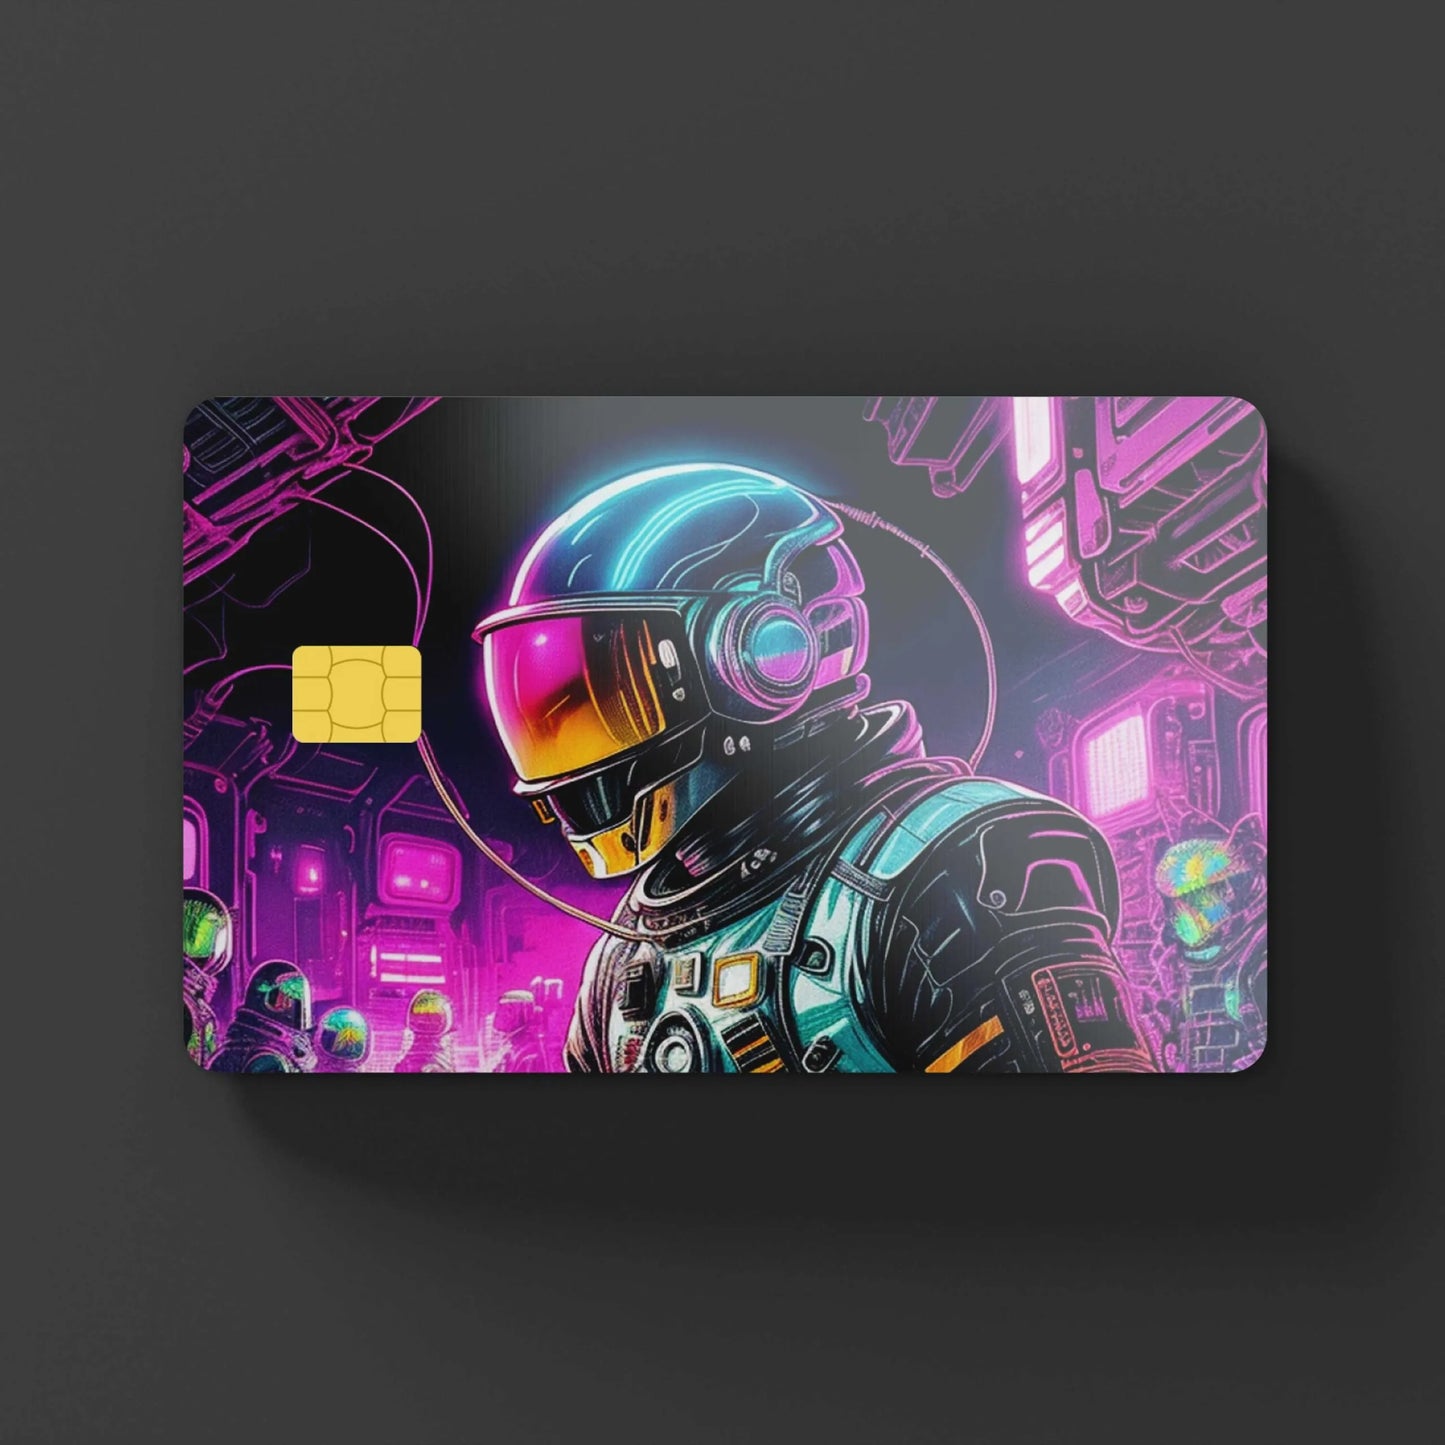 Cyberpunk Astronaut credit card skins